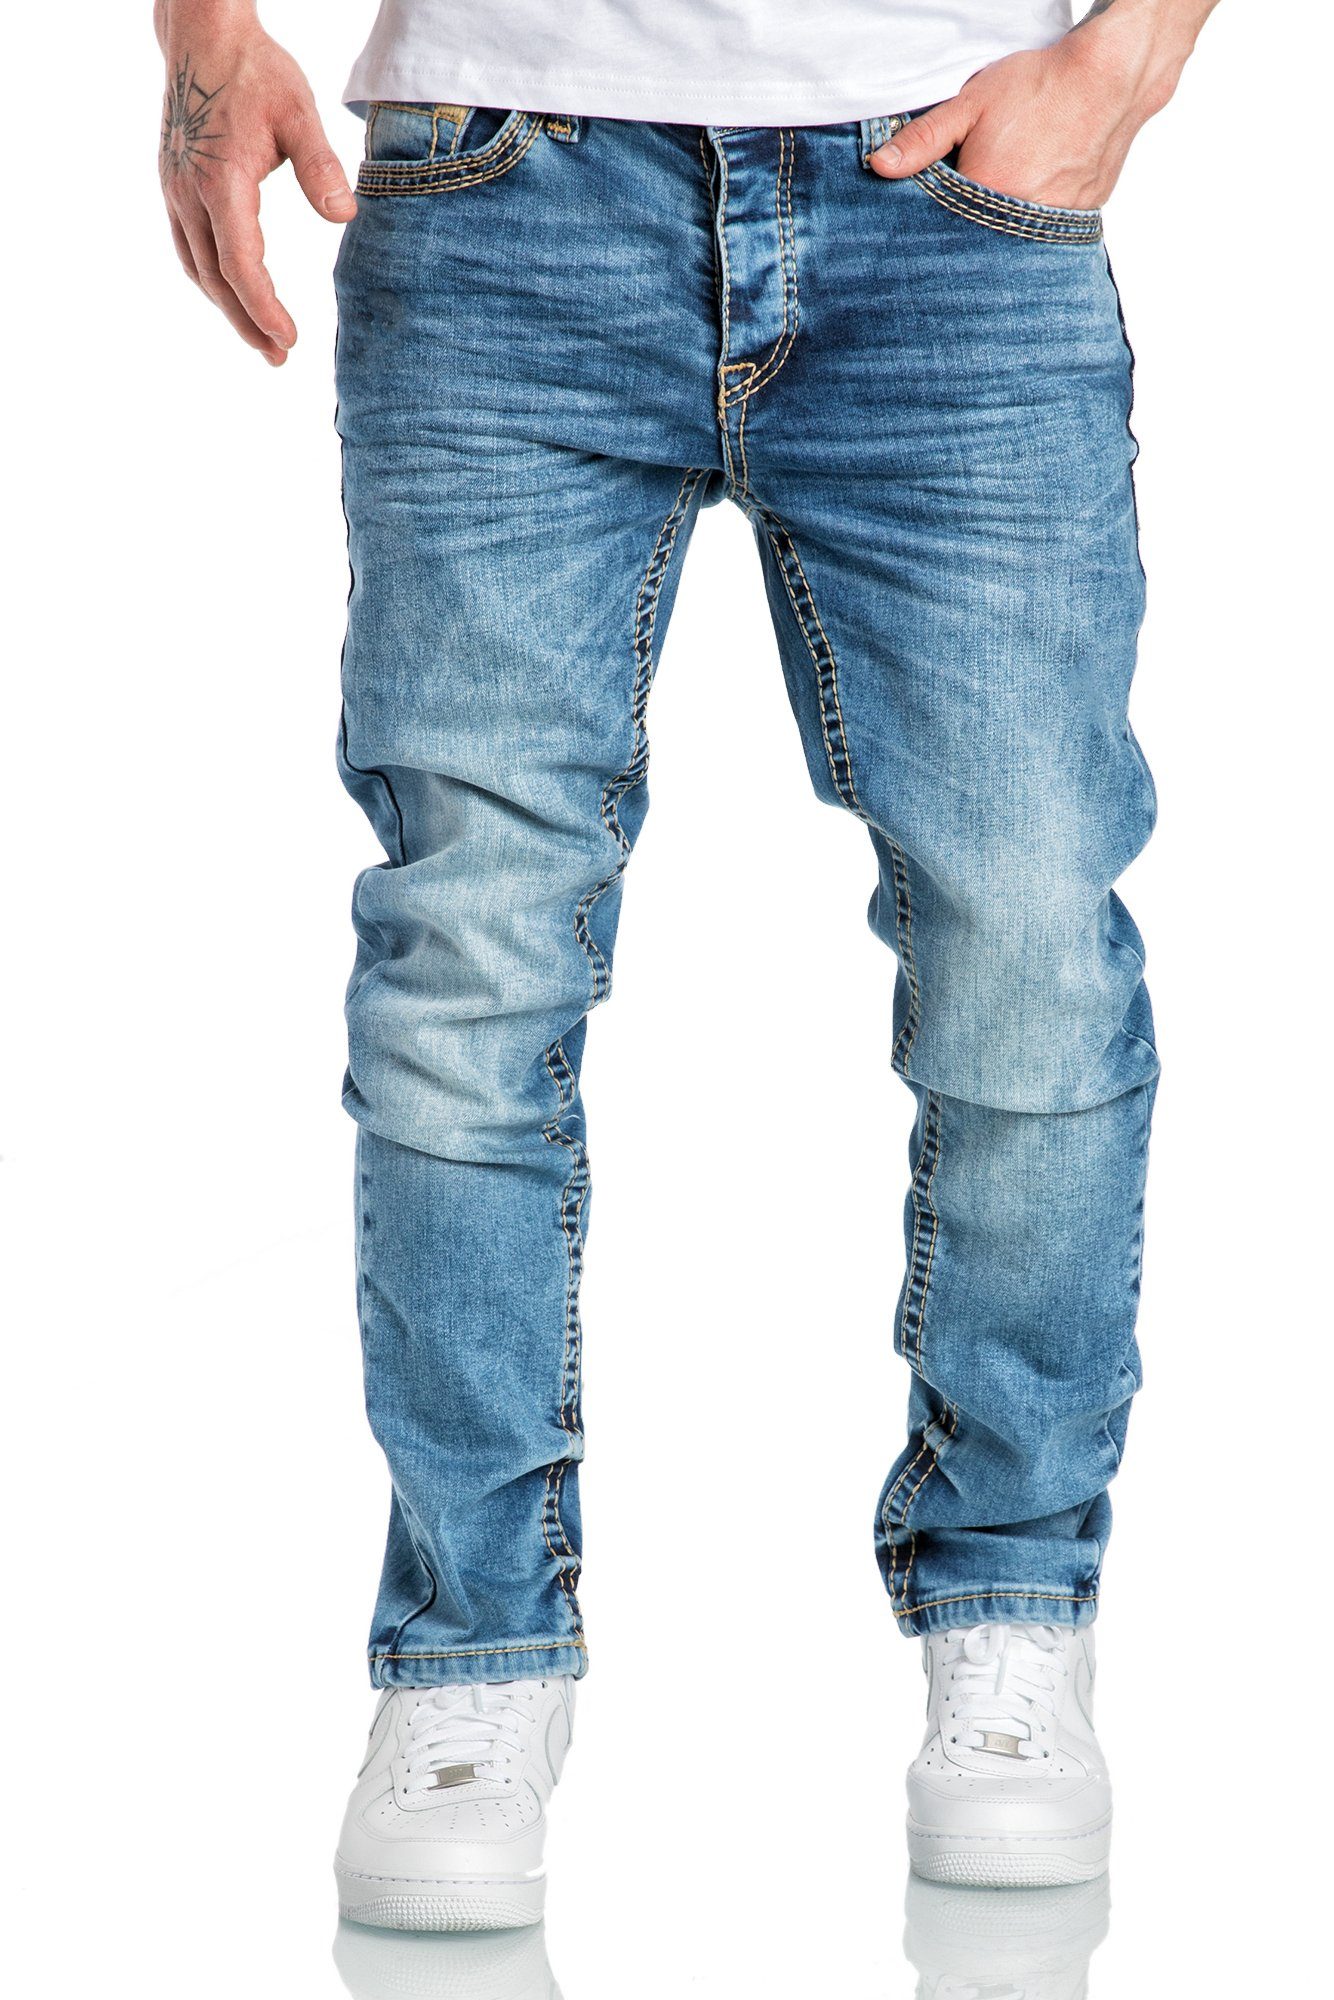 Amaci&Sons Stretch-Jeans WORCESTER Jeans Regular Slim Herren Dicke Nähte Classic Regular Slim Denim Hose Fit Hellblau